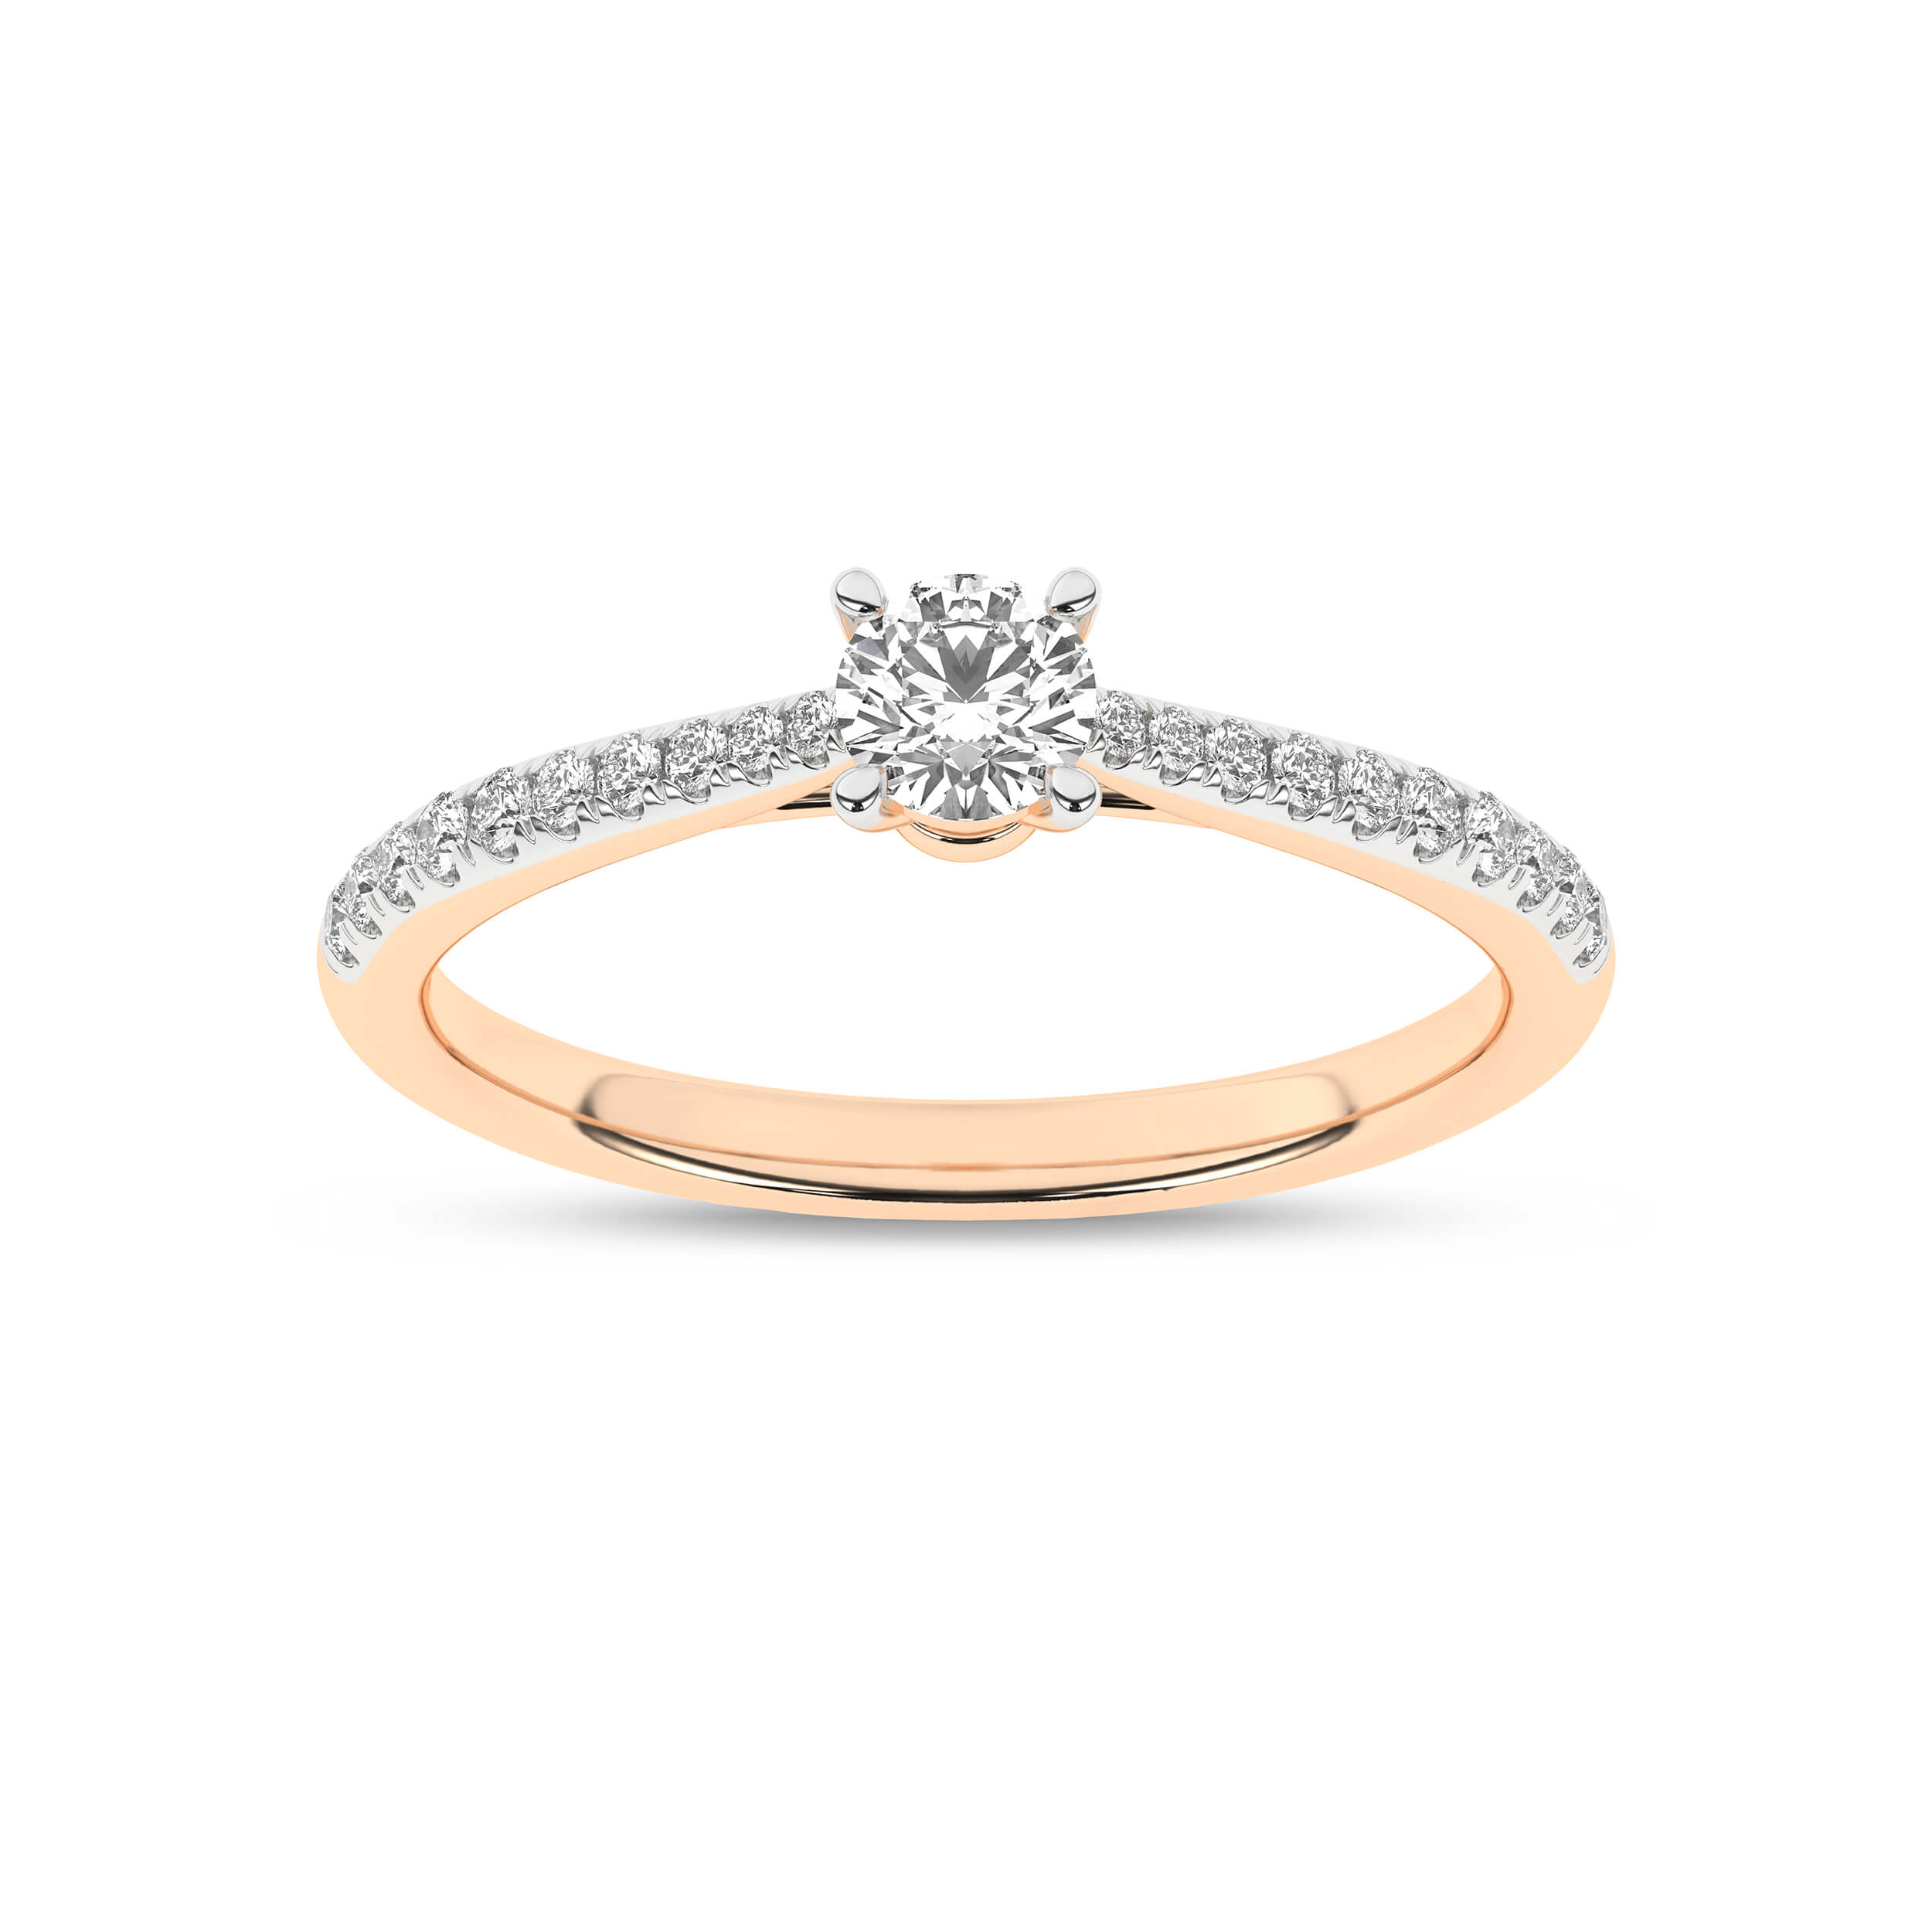 Inel de logodna din Aur Roz 14K cu Diamante 0.40Ct, articol RB21734EG, previzualizare foto 1